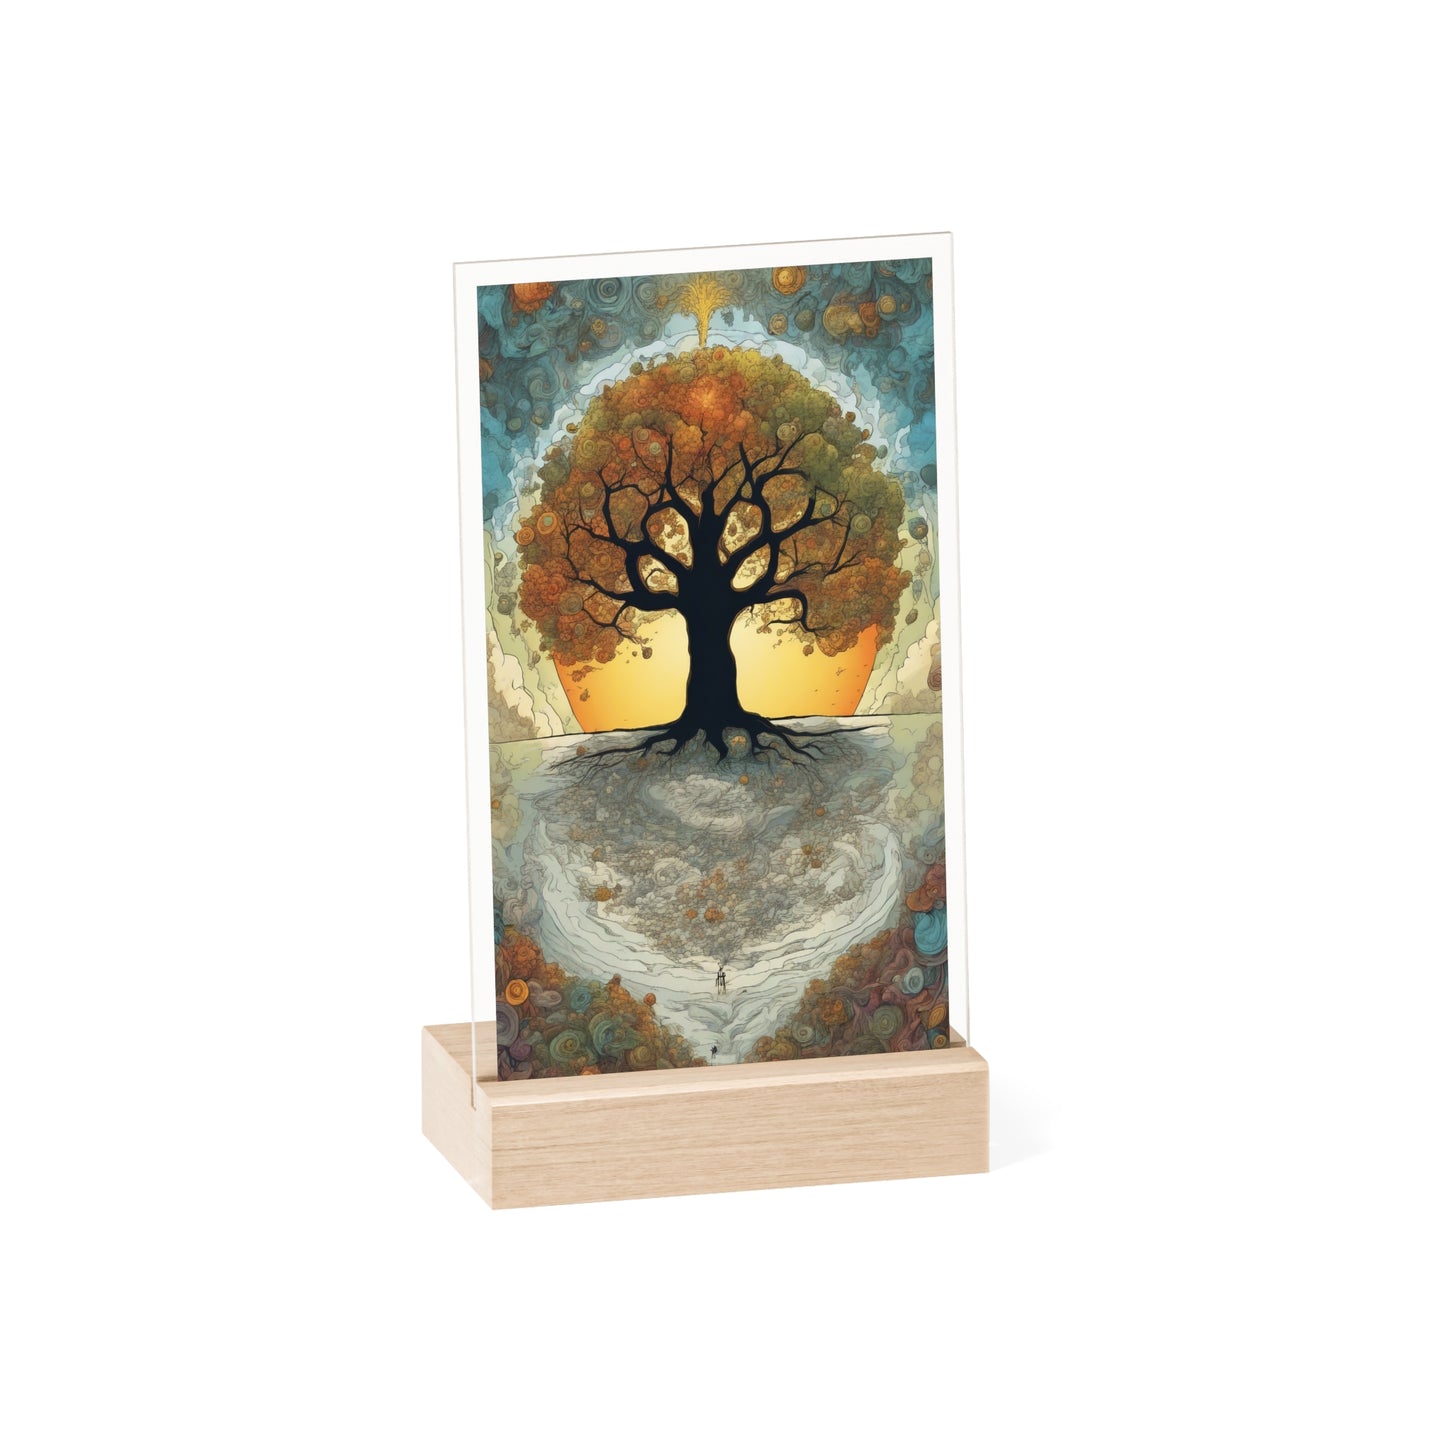 Acrylbild spiritueller Lebensbaum 2